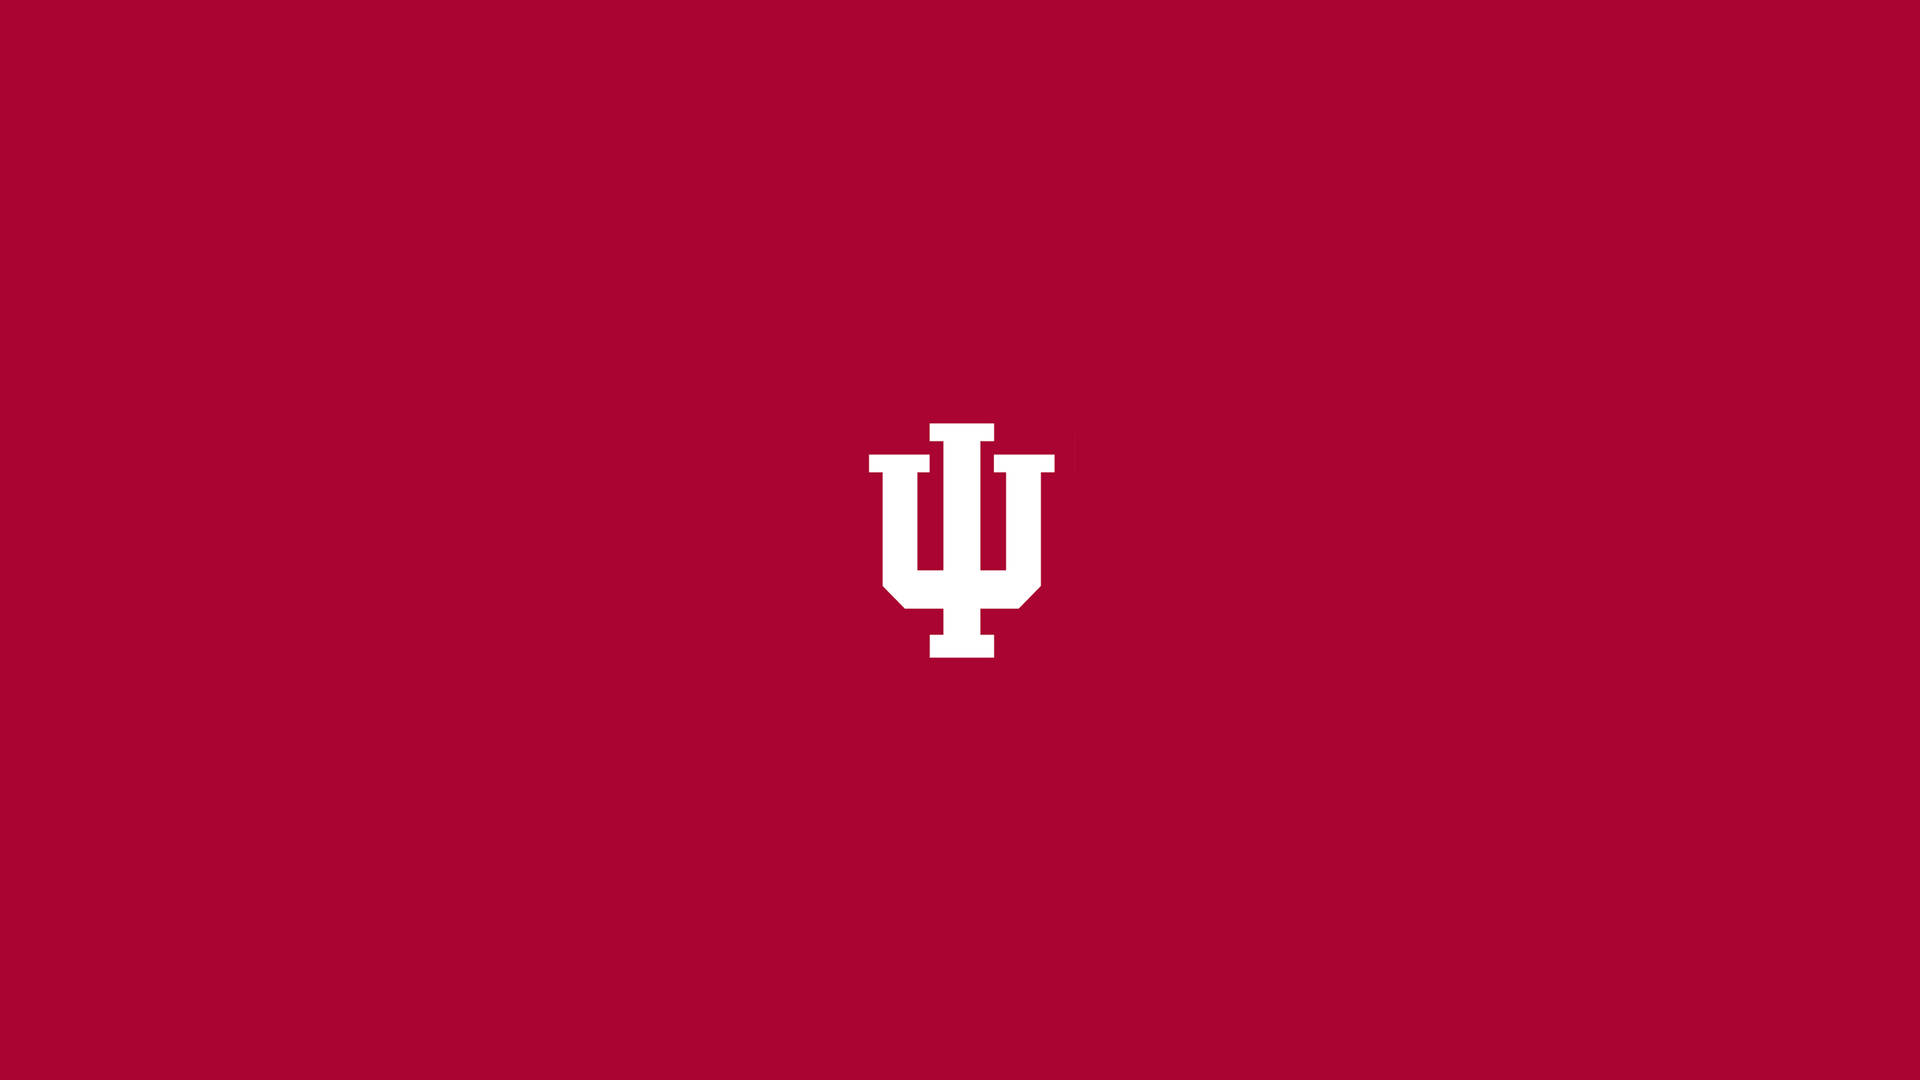 Indiana University 2560 X 1440 Wallpaper